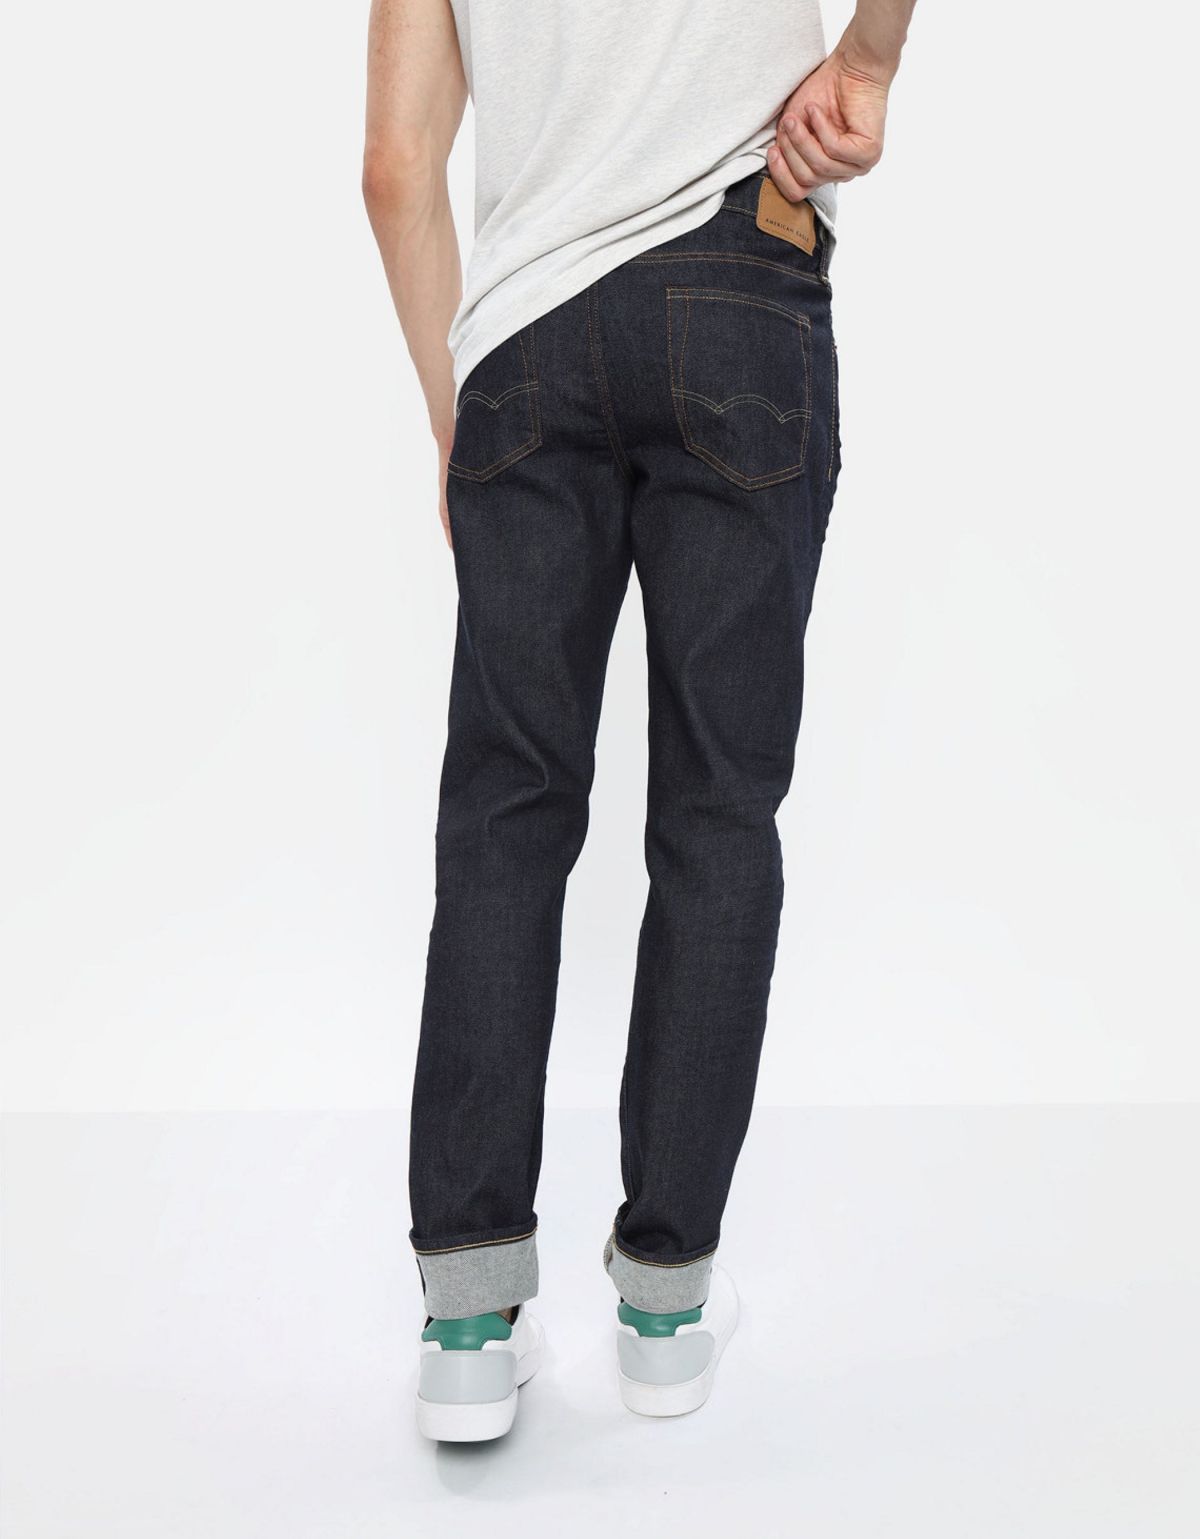  מכנסי סקיני ג'ינס של AMERICAN EAGLE